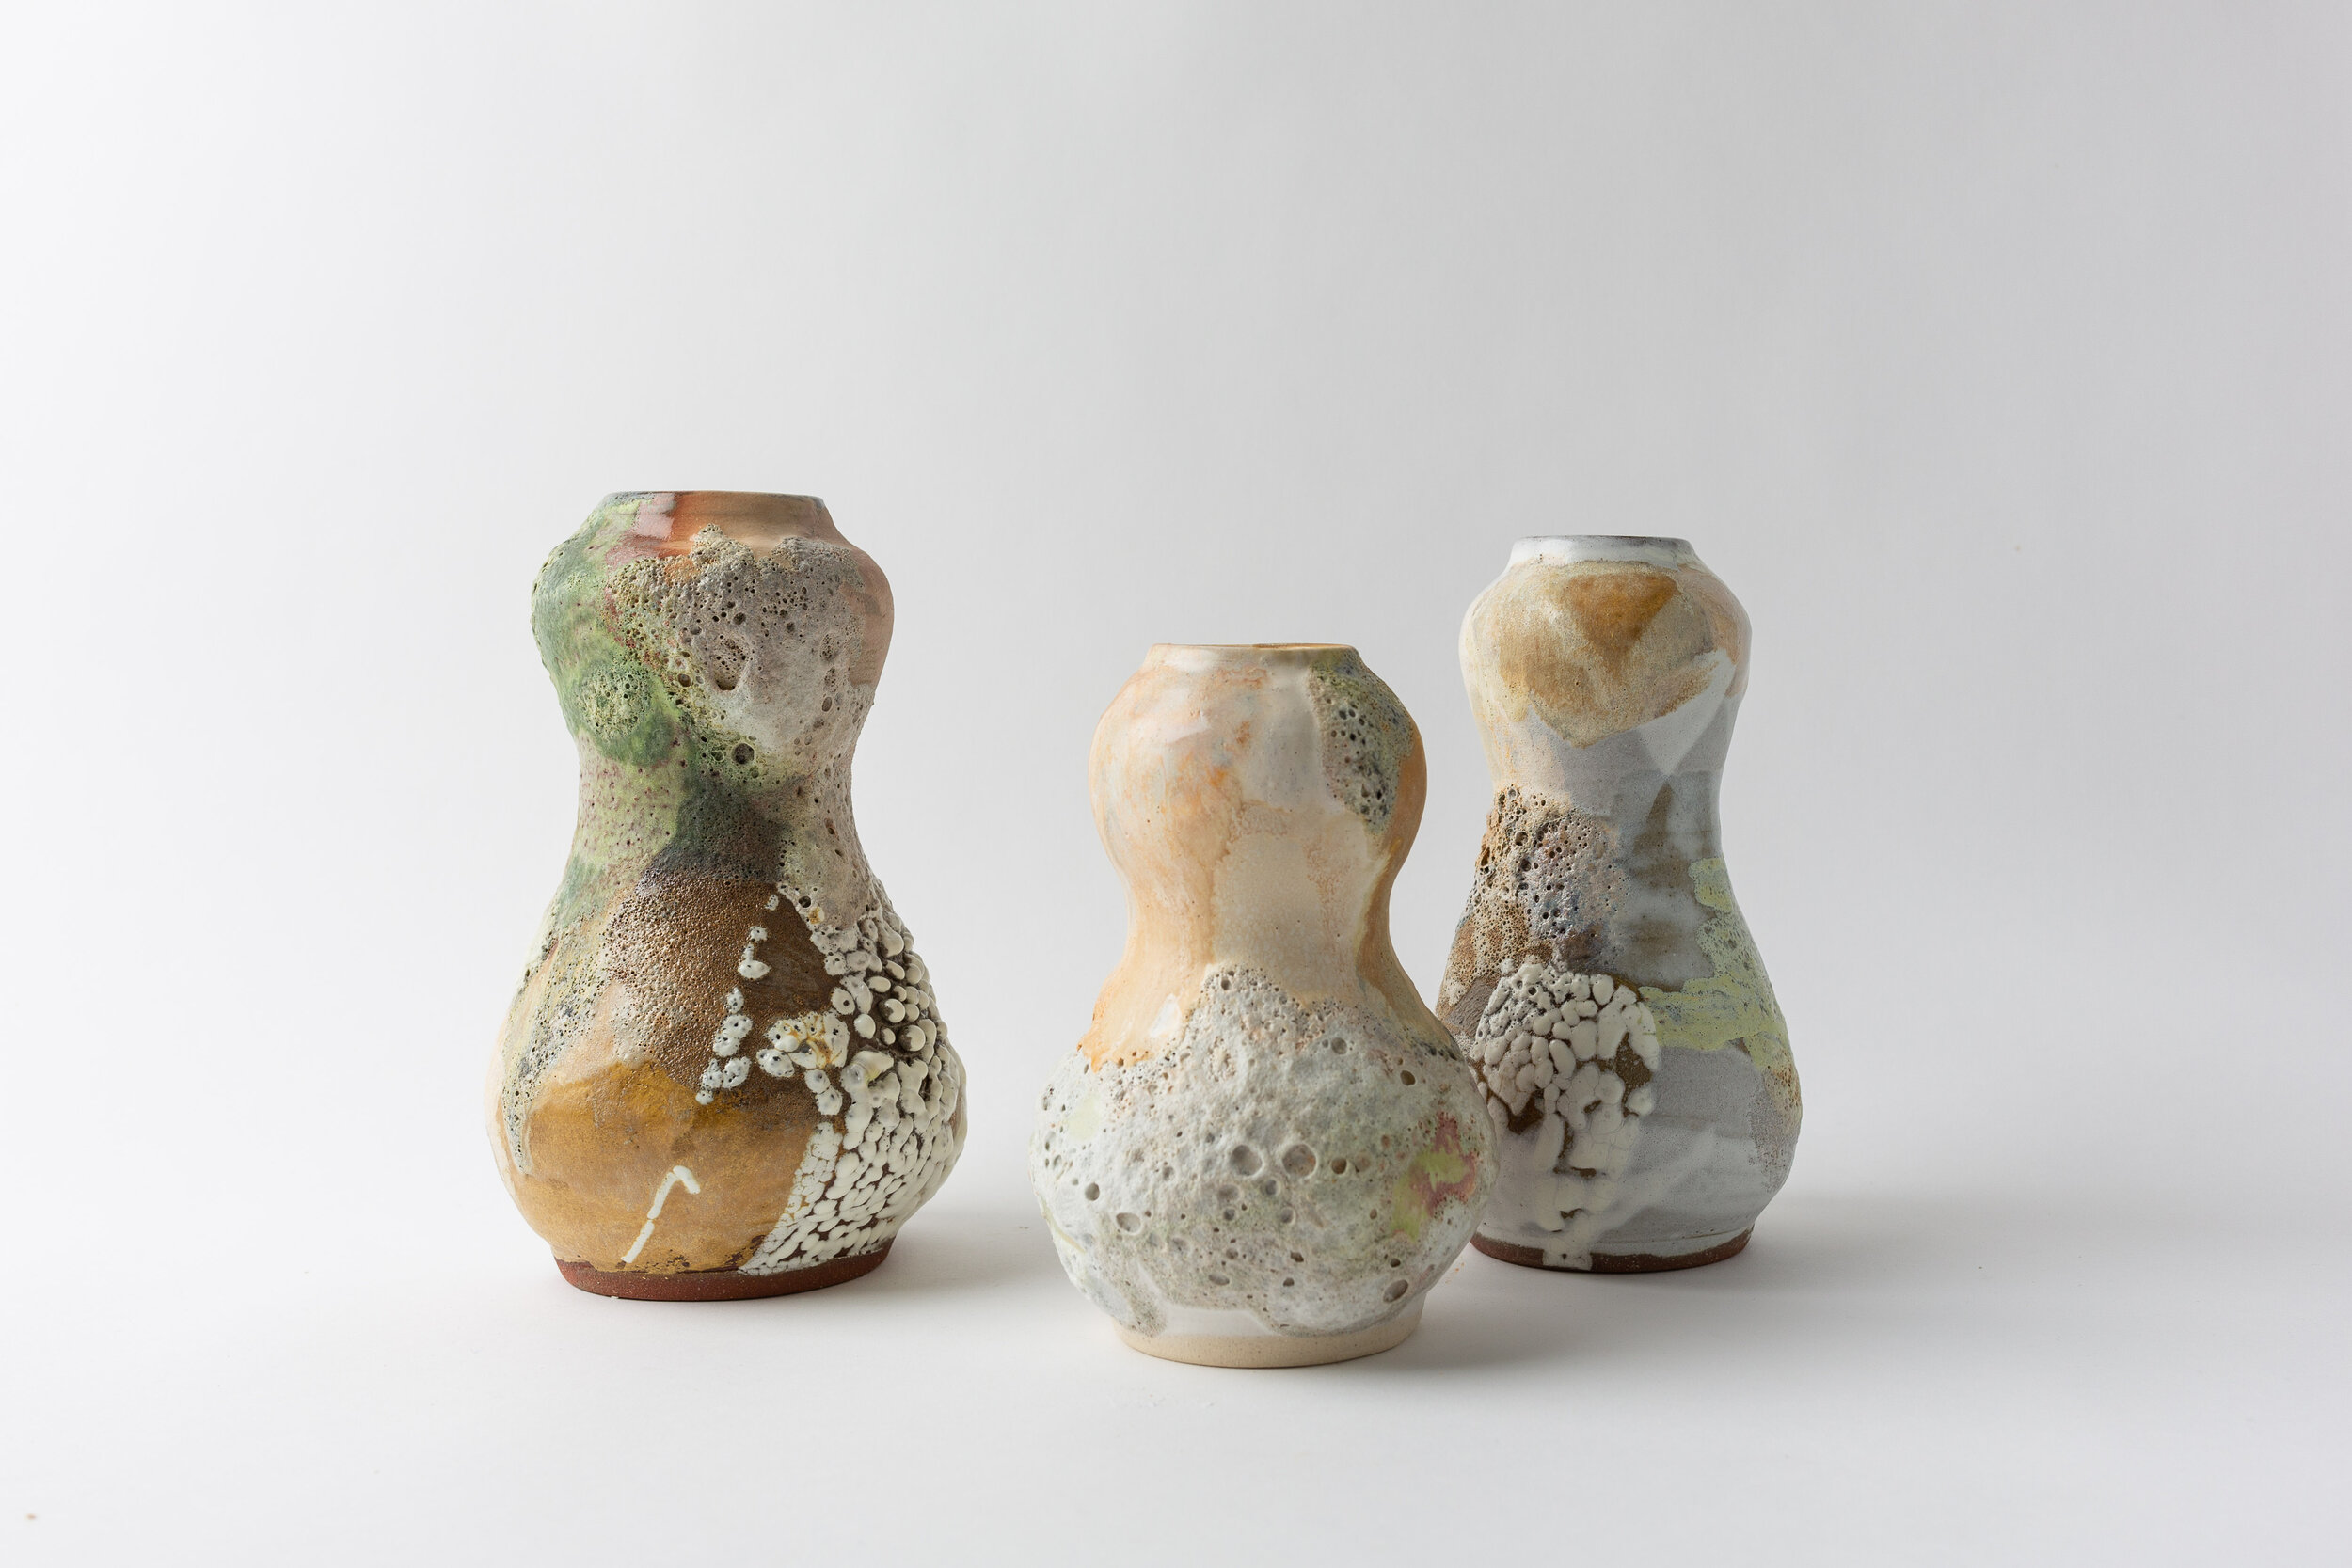  Garlic Head Vases, May 2020 